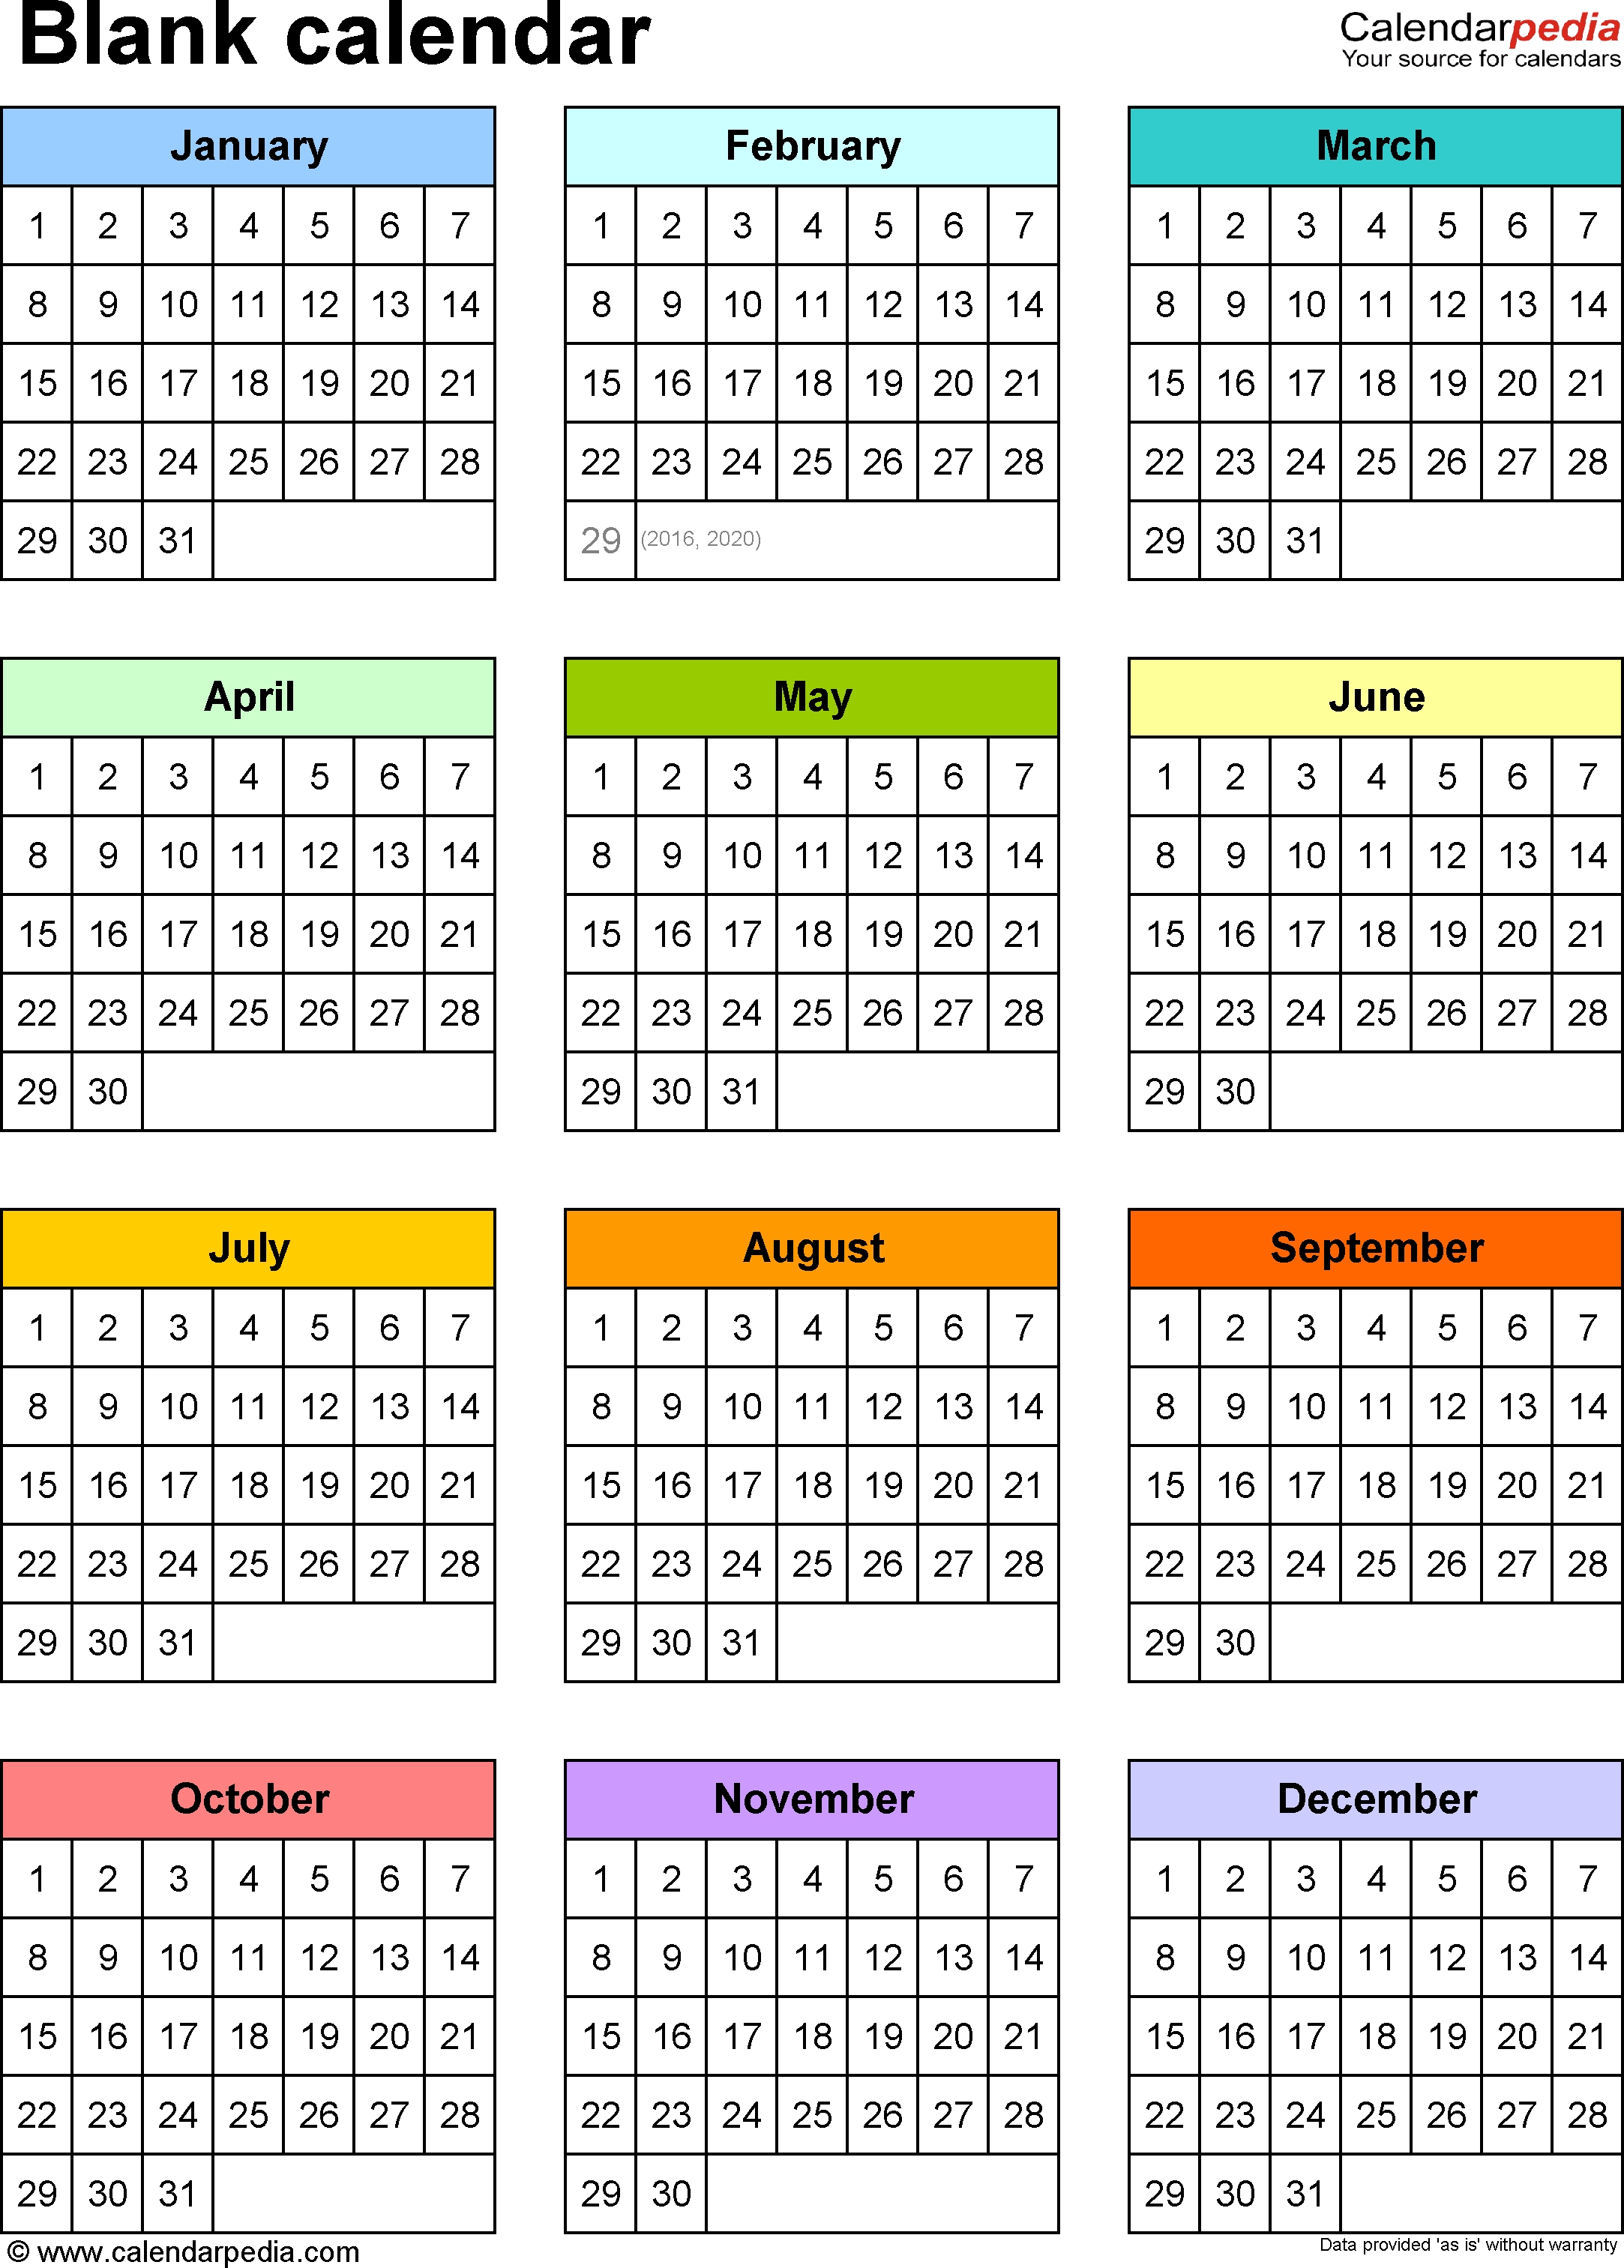 Blank Calendar - 9 Free Printable Microsoft Word Templates 4 Calendar Months On One Page